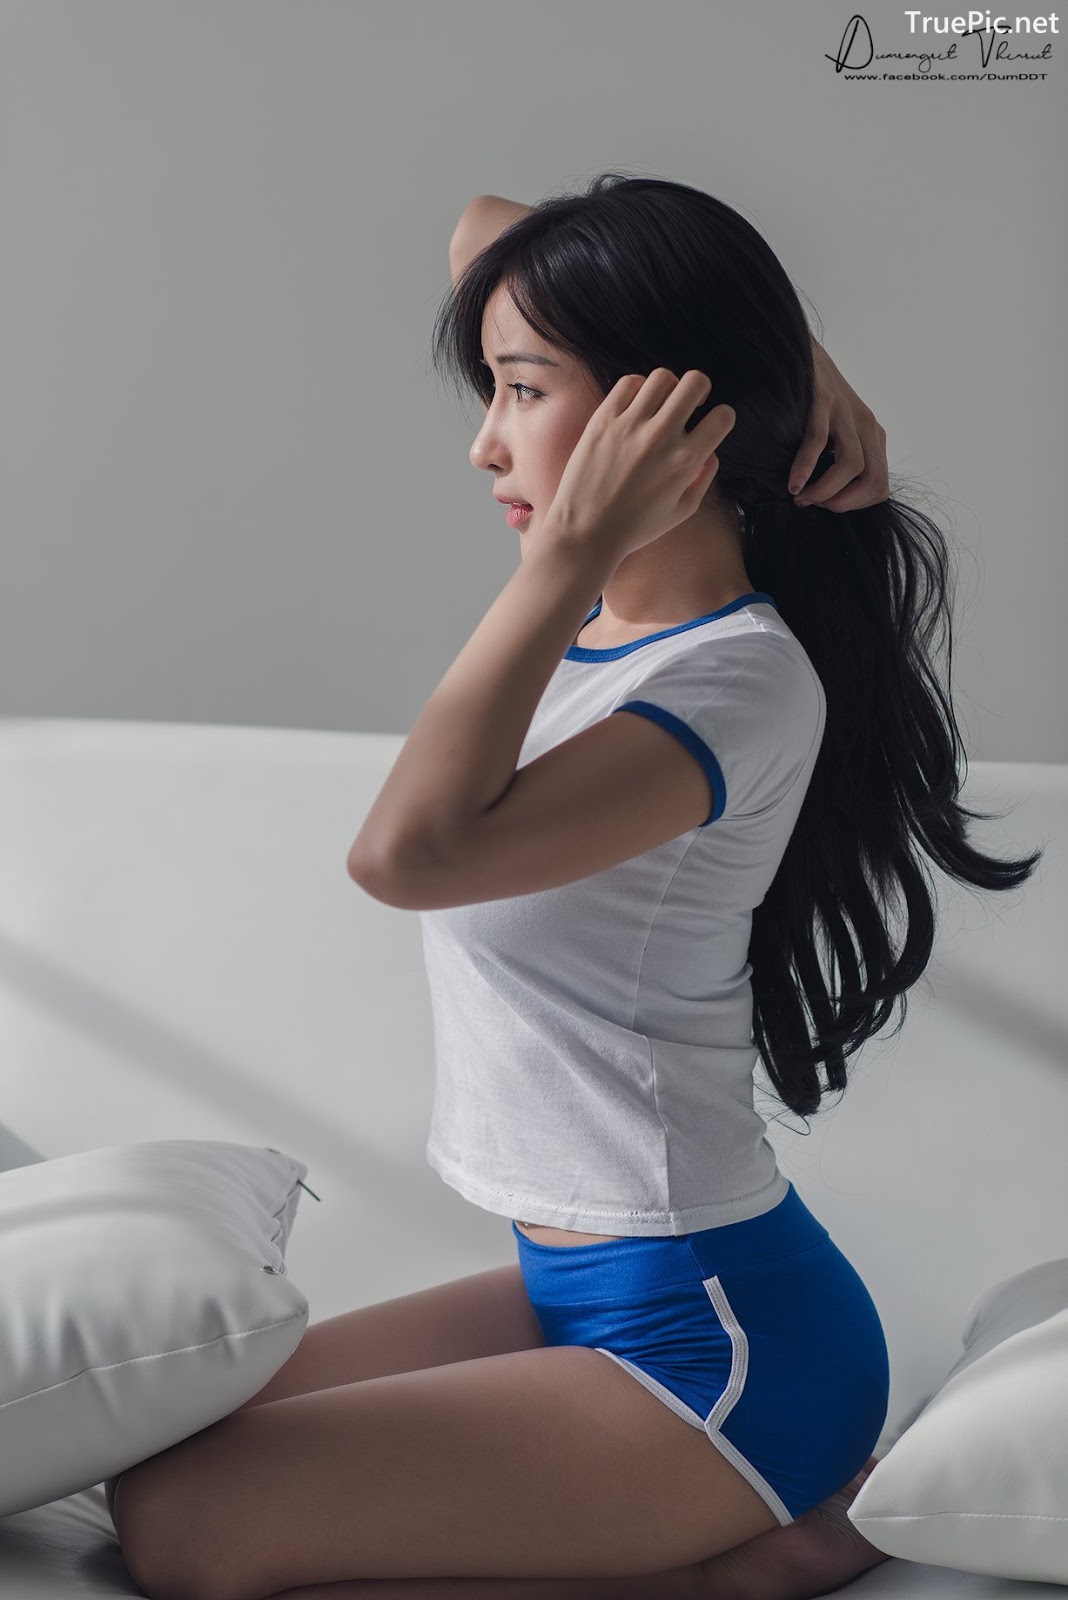 Image Thailand Hot Model - Thanyarat Charoenpornkittada - Cute Student Girl - TruePic.net - Picture-22